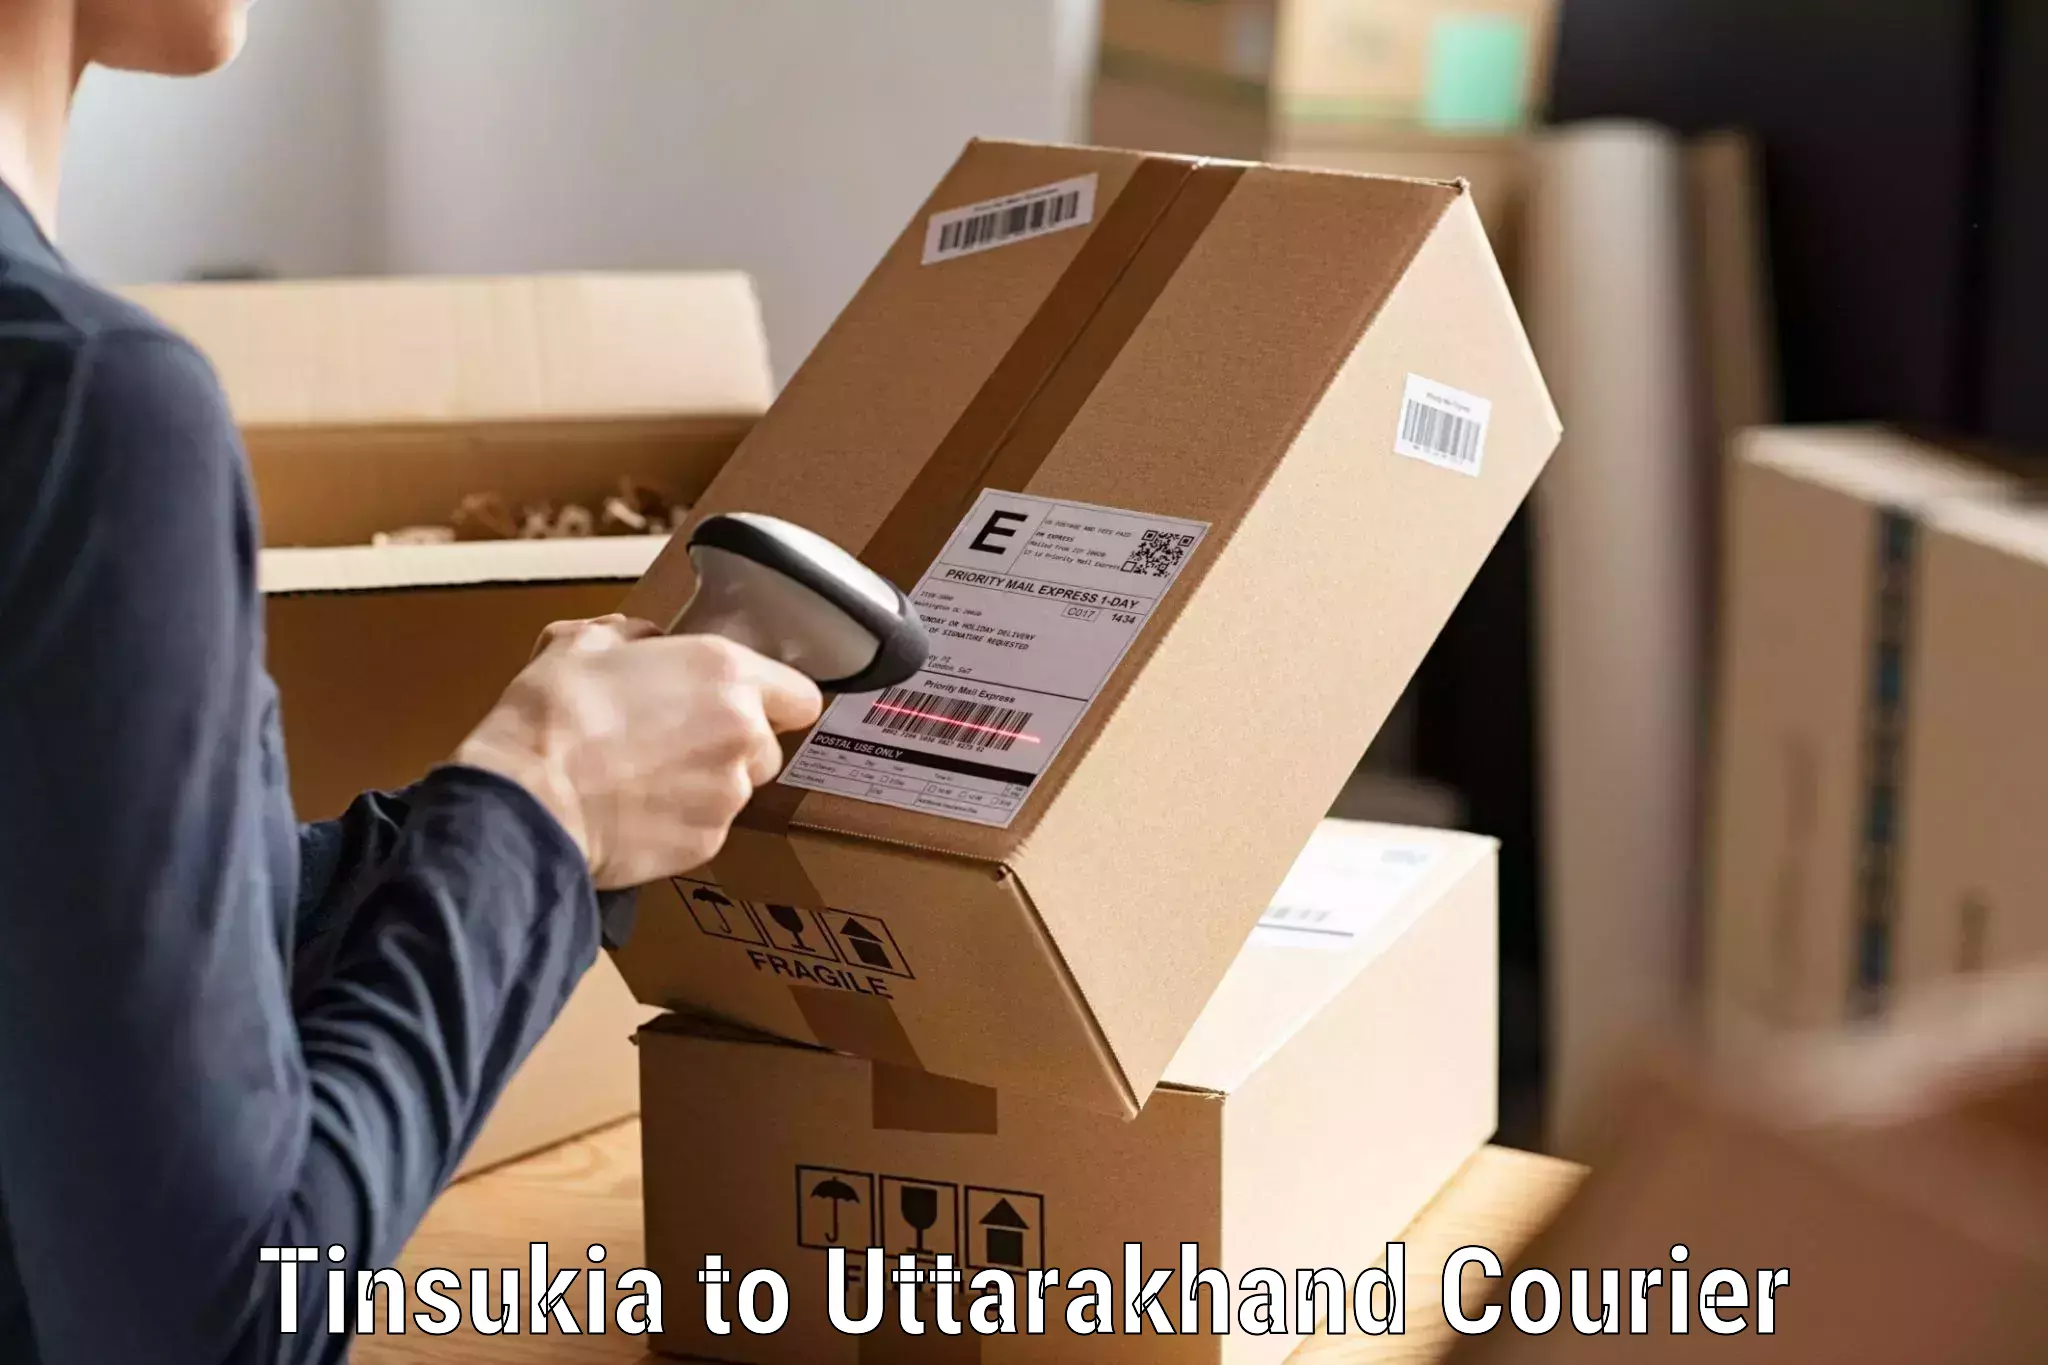 Cash on delivery service Tinsukia to Pauri